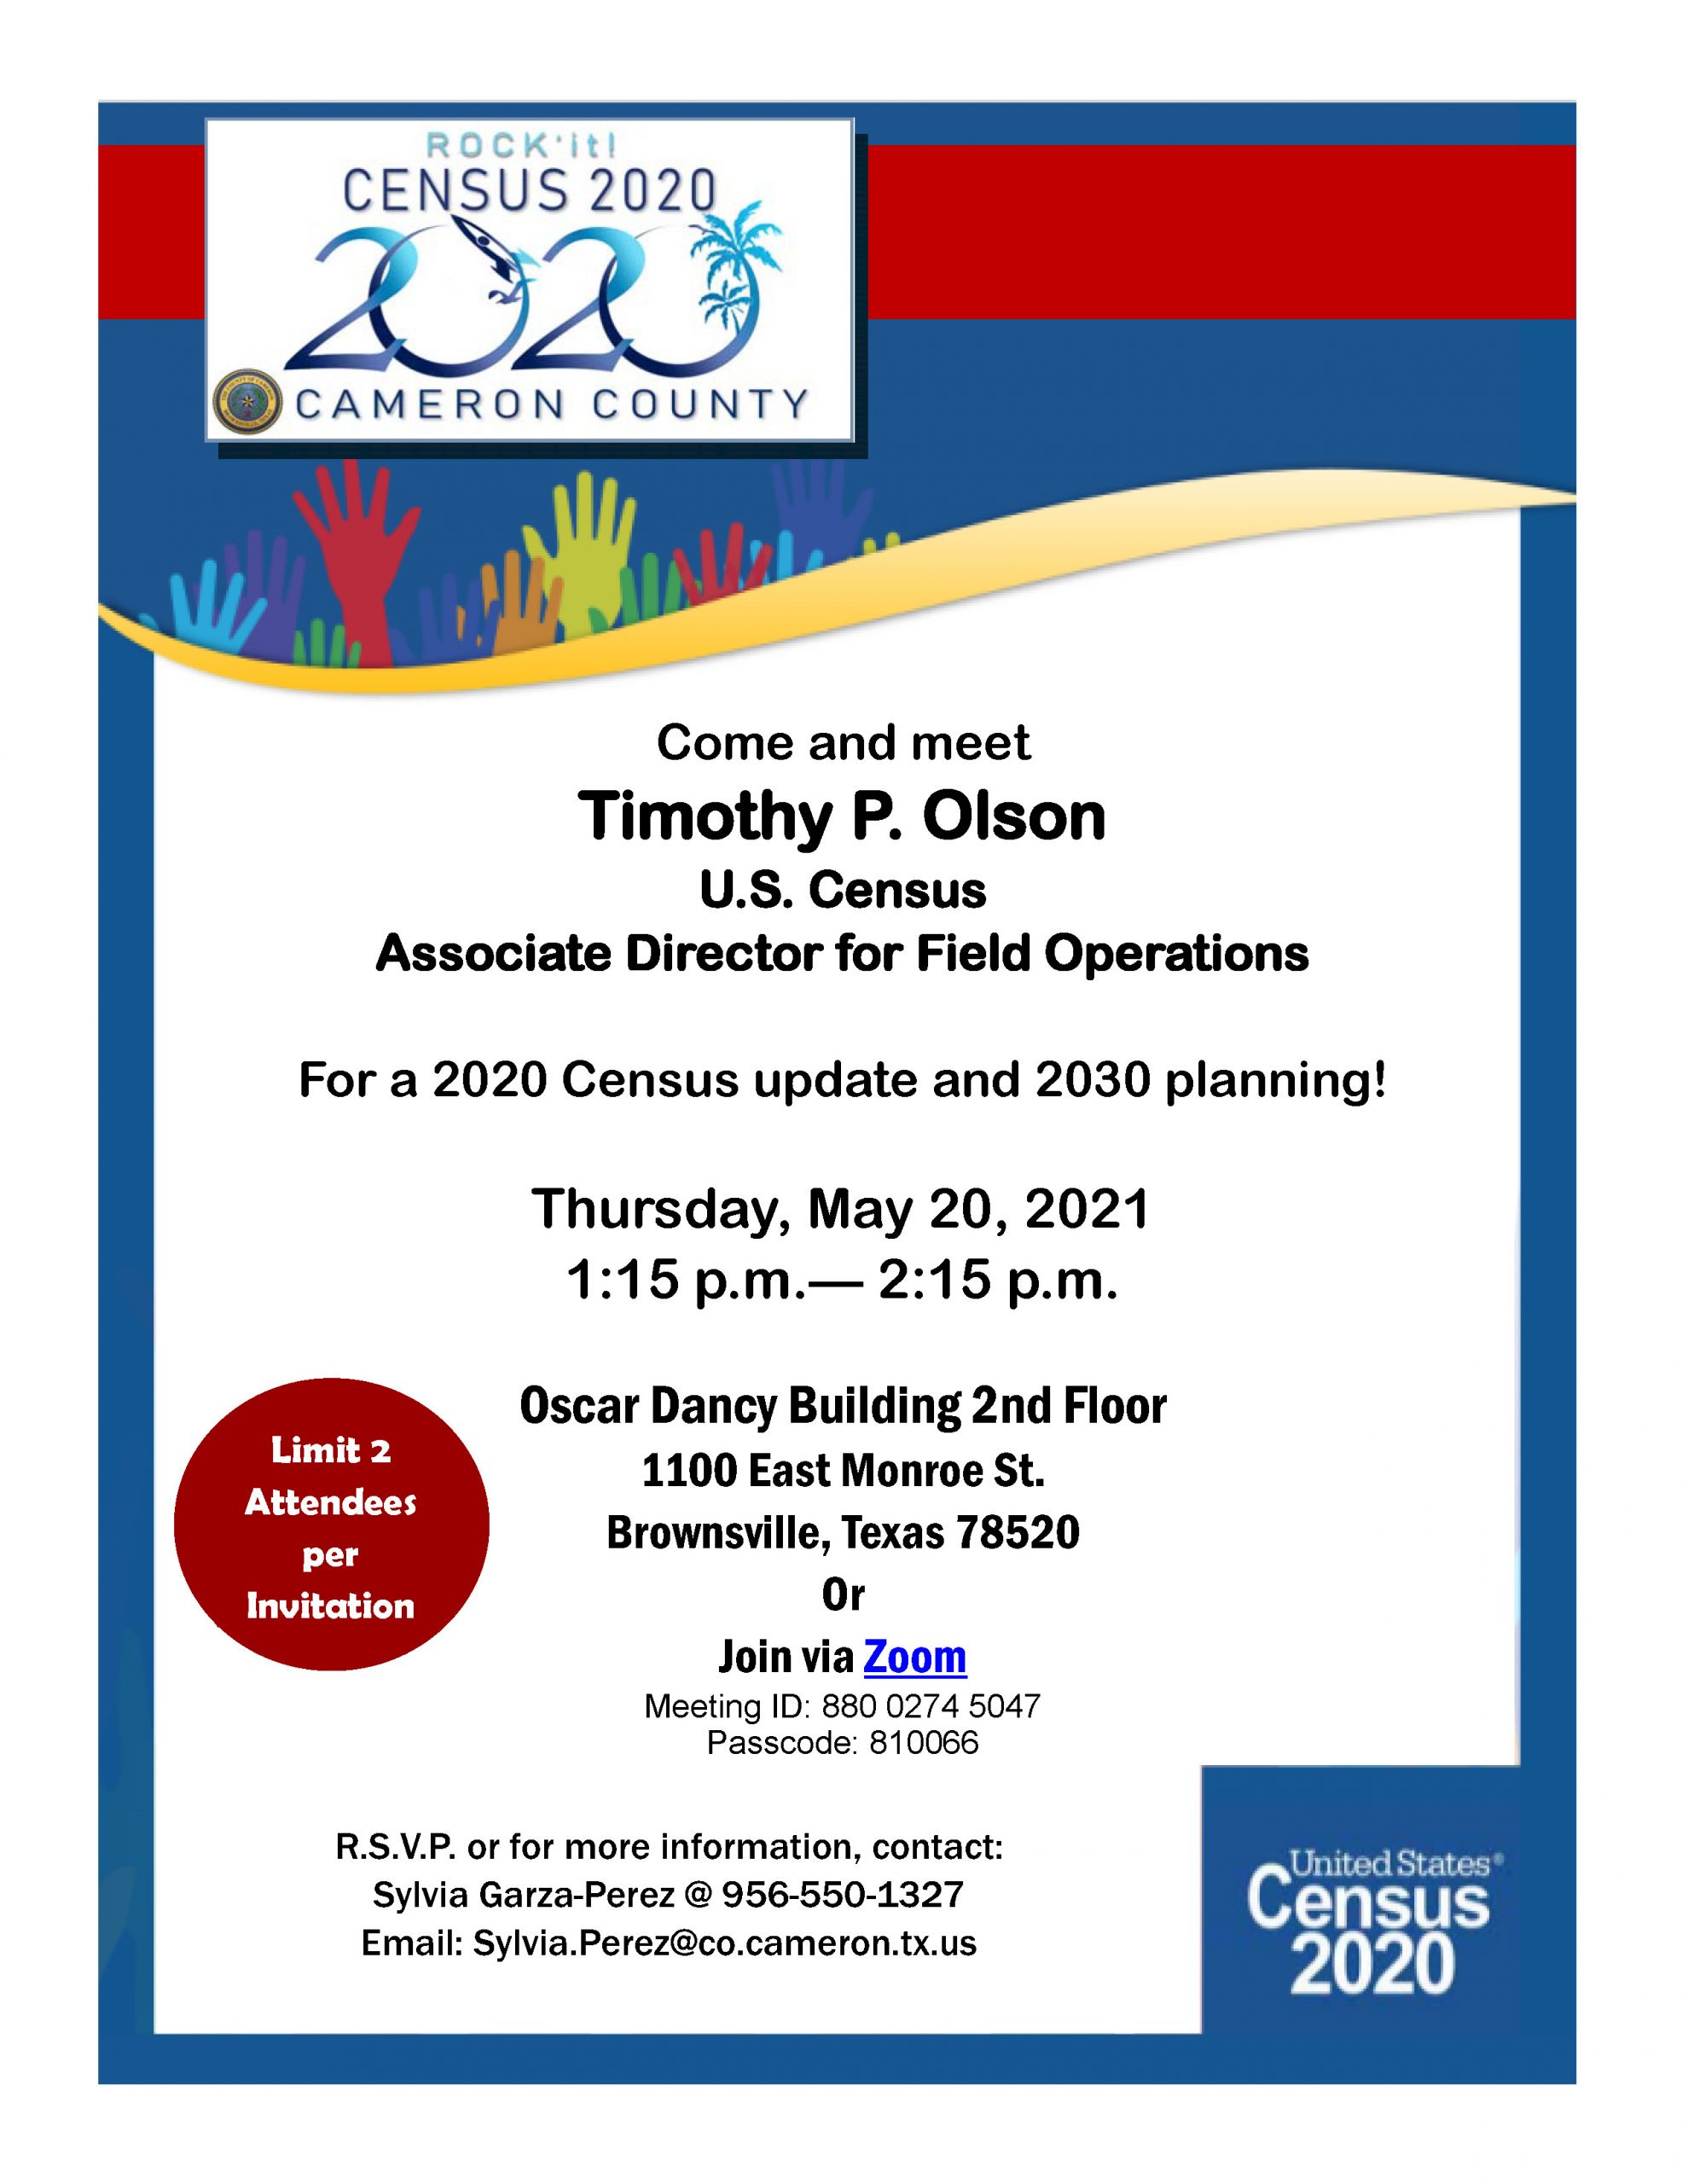 Cameron County Census Inviation 002 Scaled